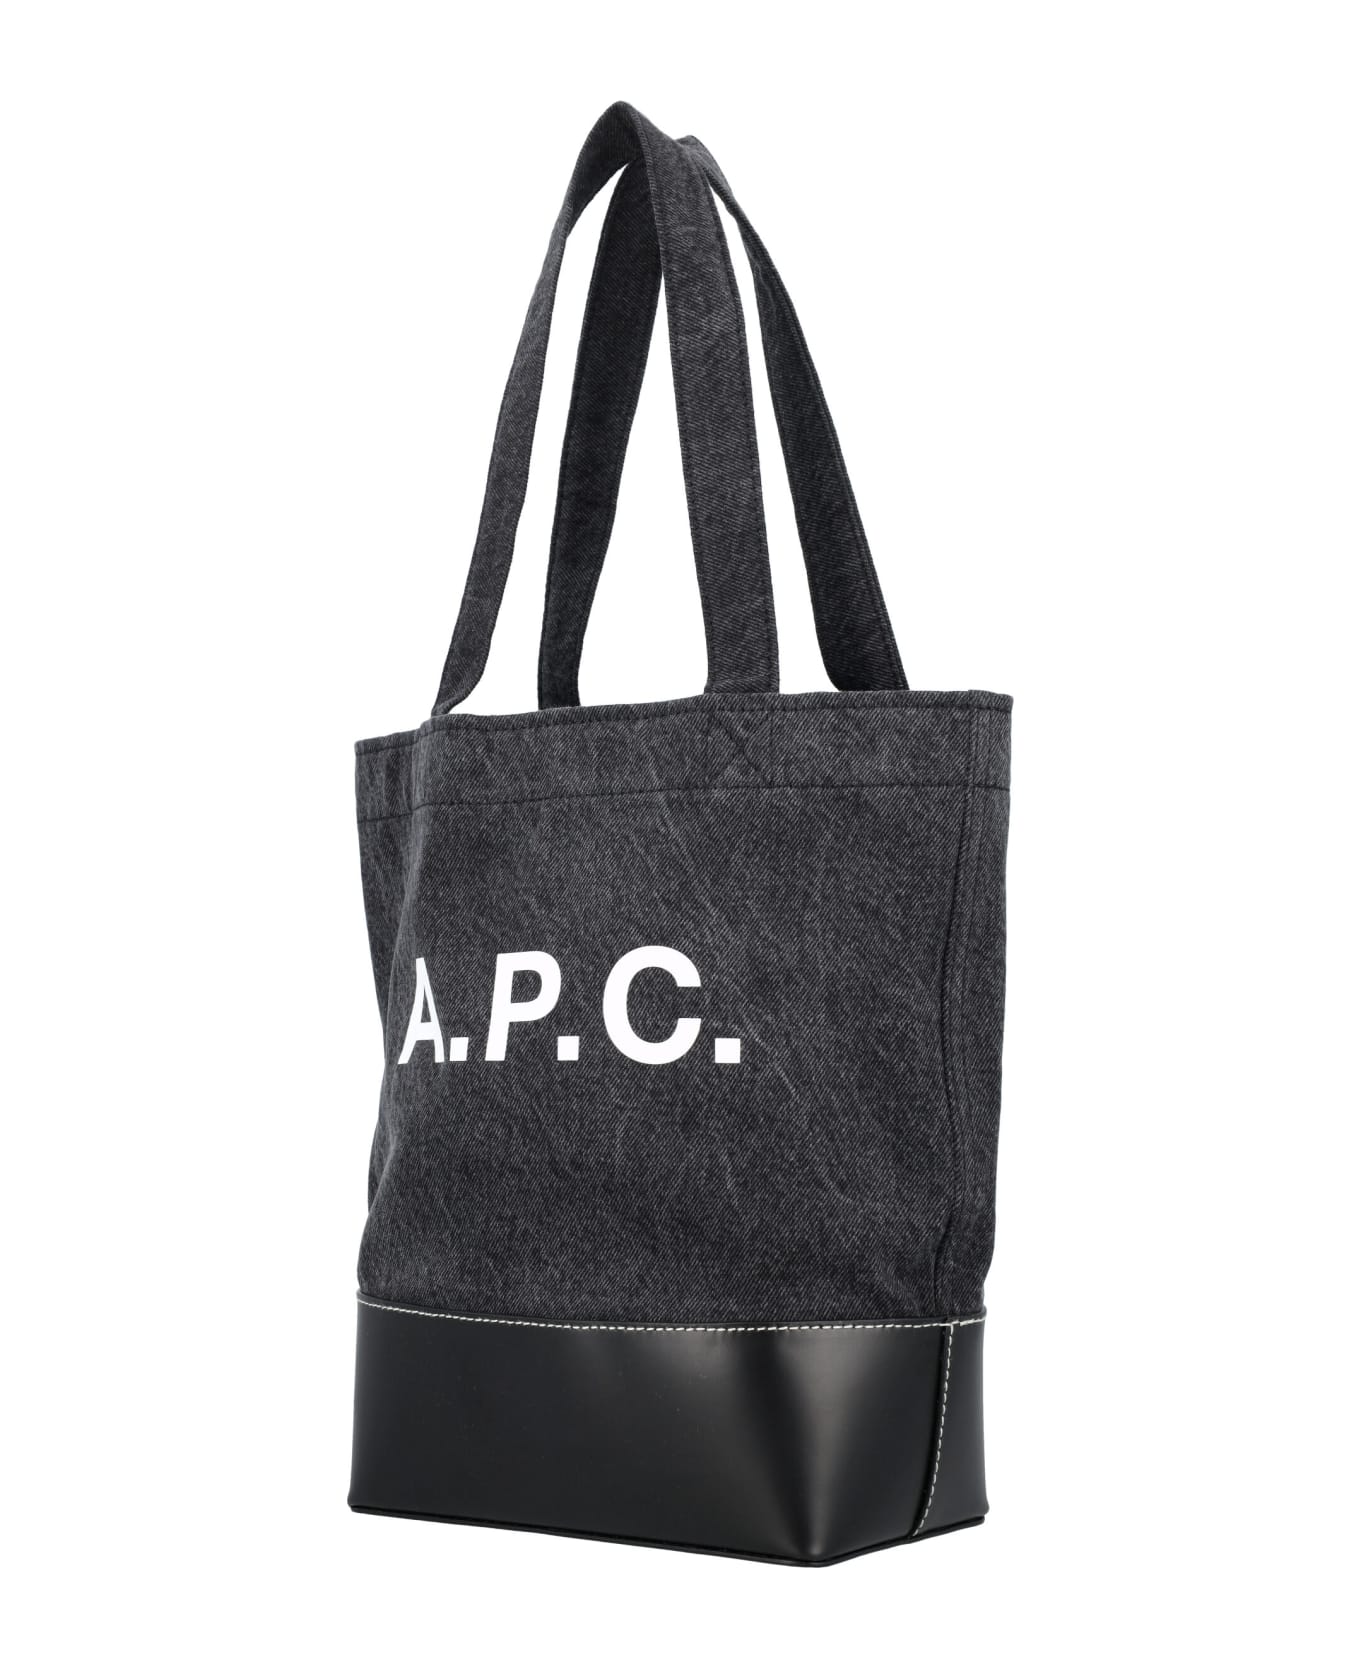 A.P.C. Axel Small Tote Bag - BLACK BLUE